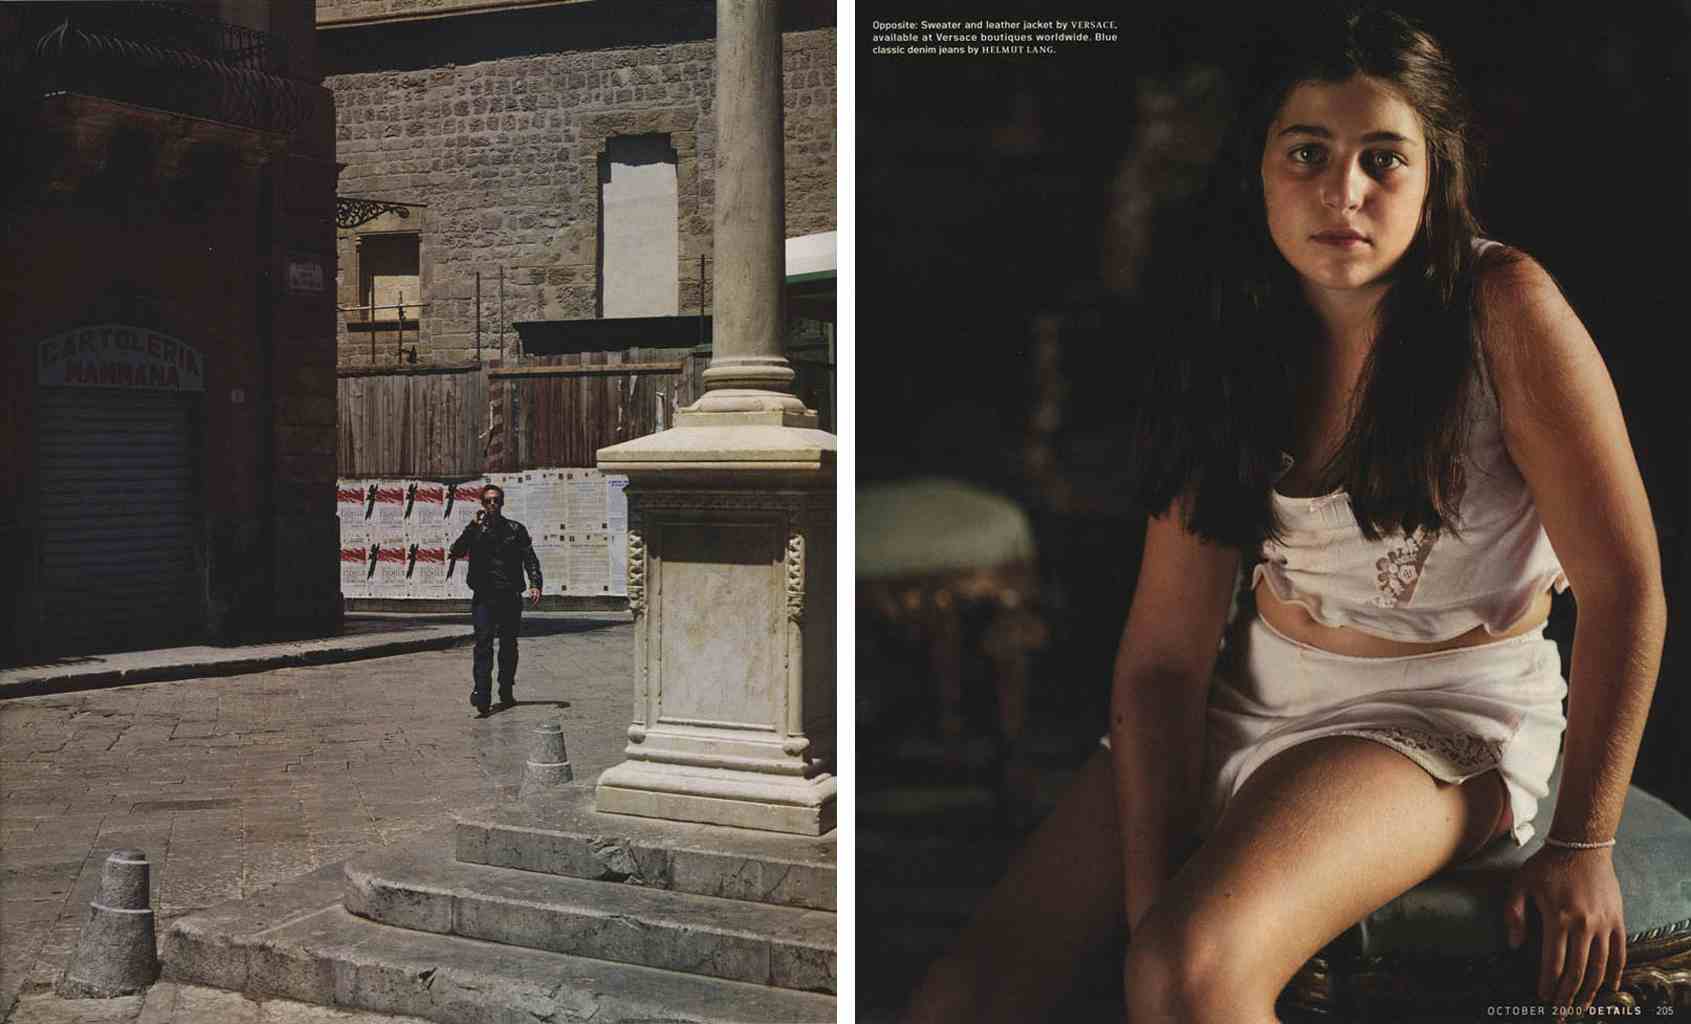 DETAILS - 2000
Photographer: Michael Tompson
Model: Joseph Fiennes
Stylist: Joe Zee
Location: Sicily - Italy